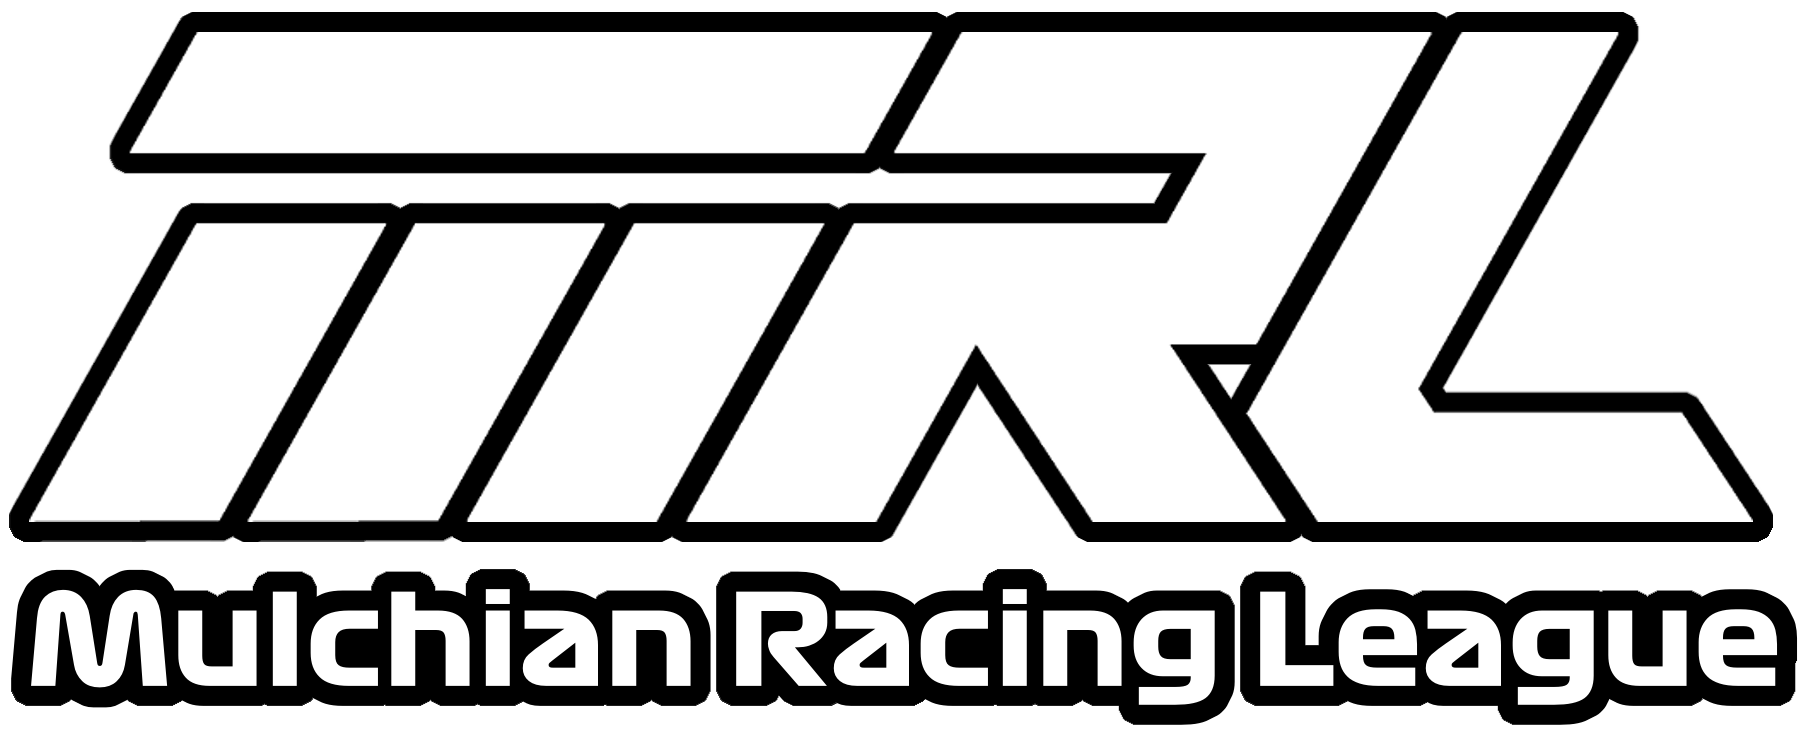 Mulchian Racing League